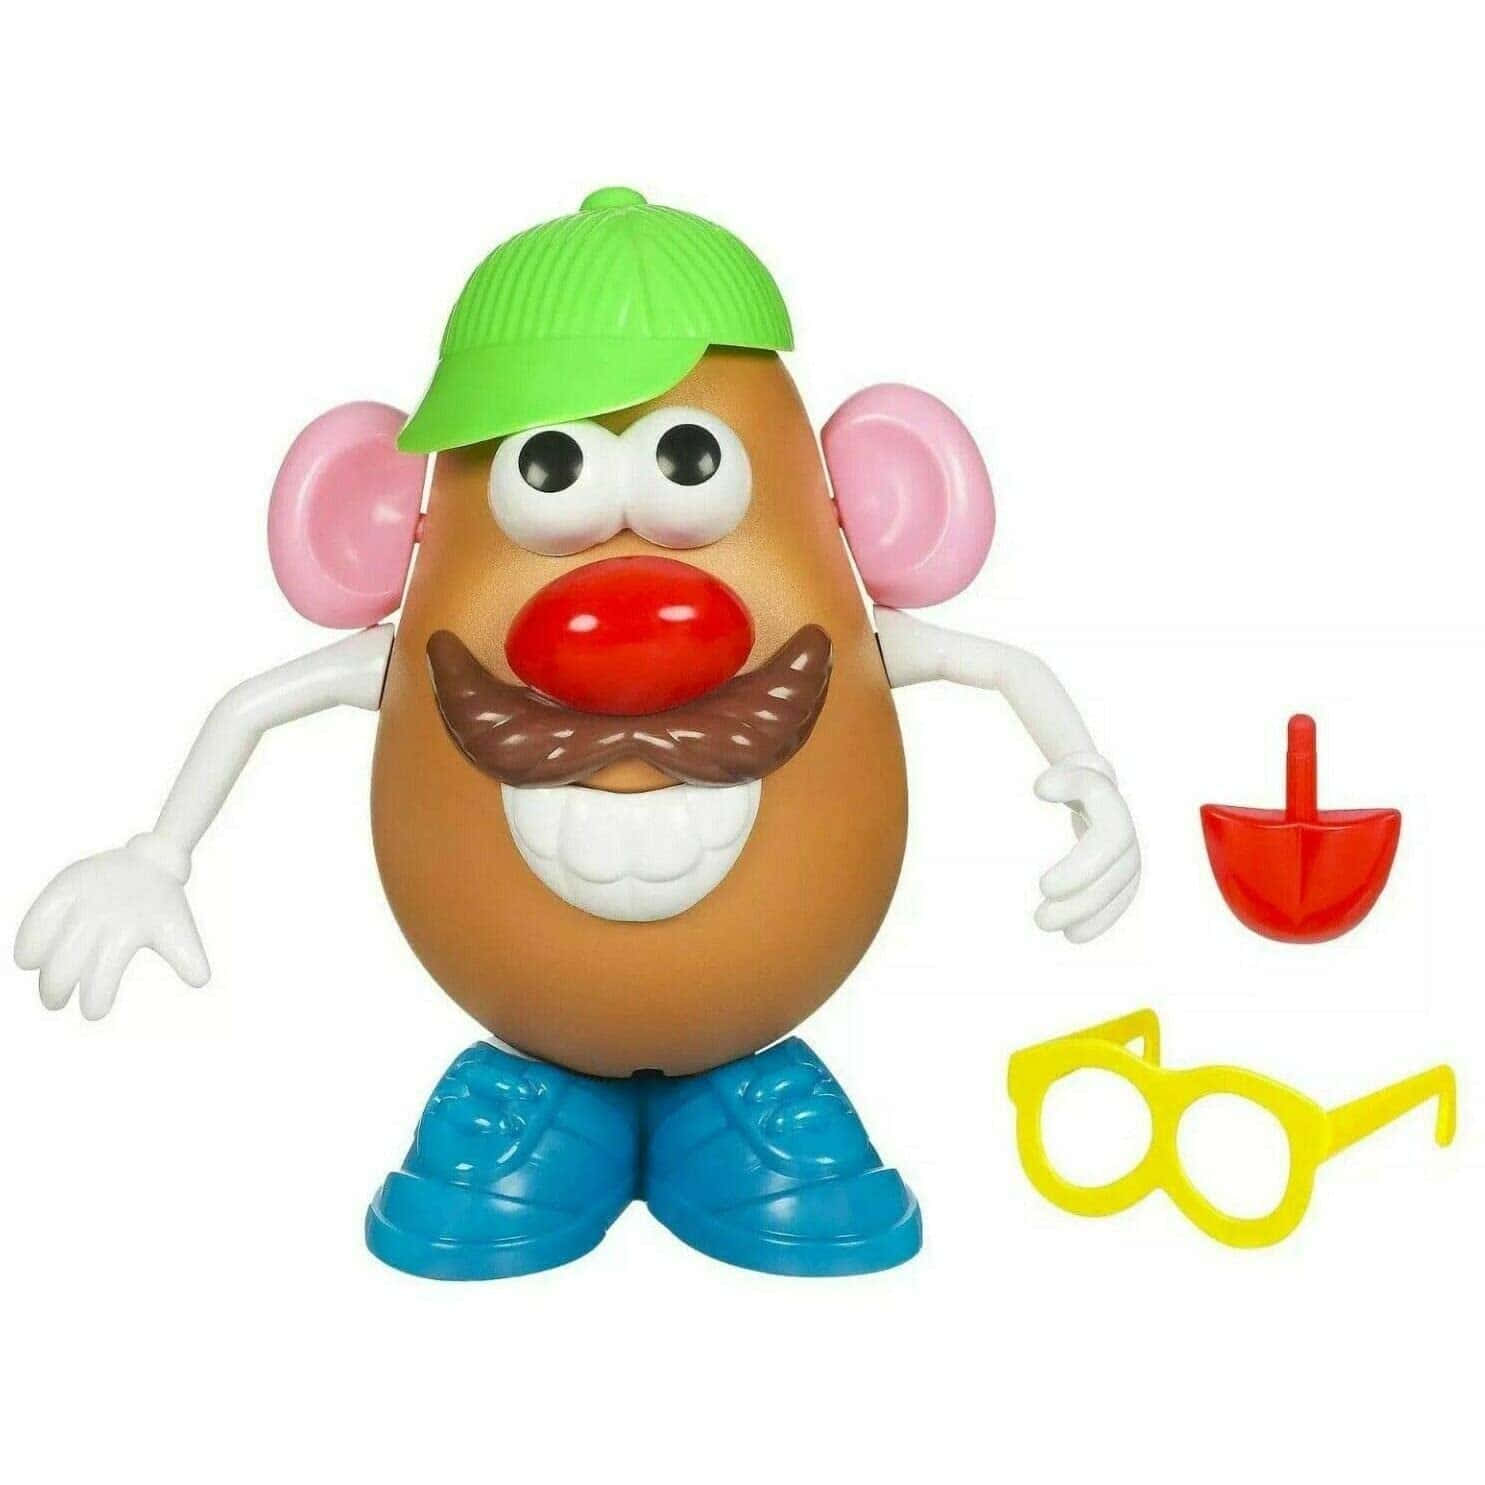 Mr Potato Head - Mr Potato Head